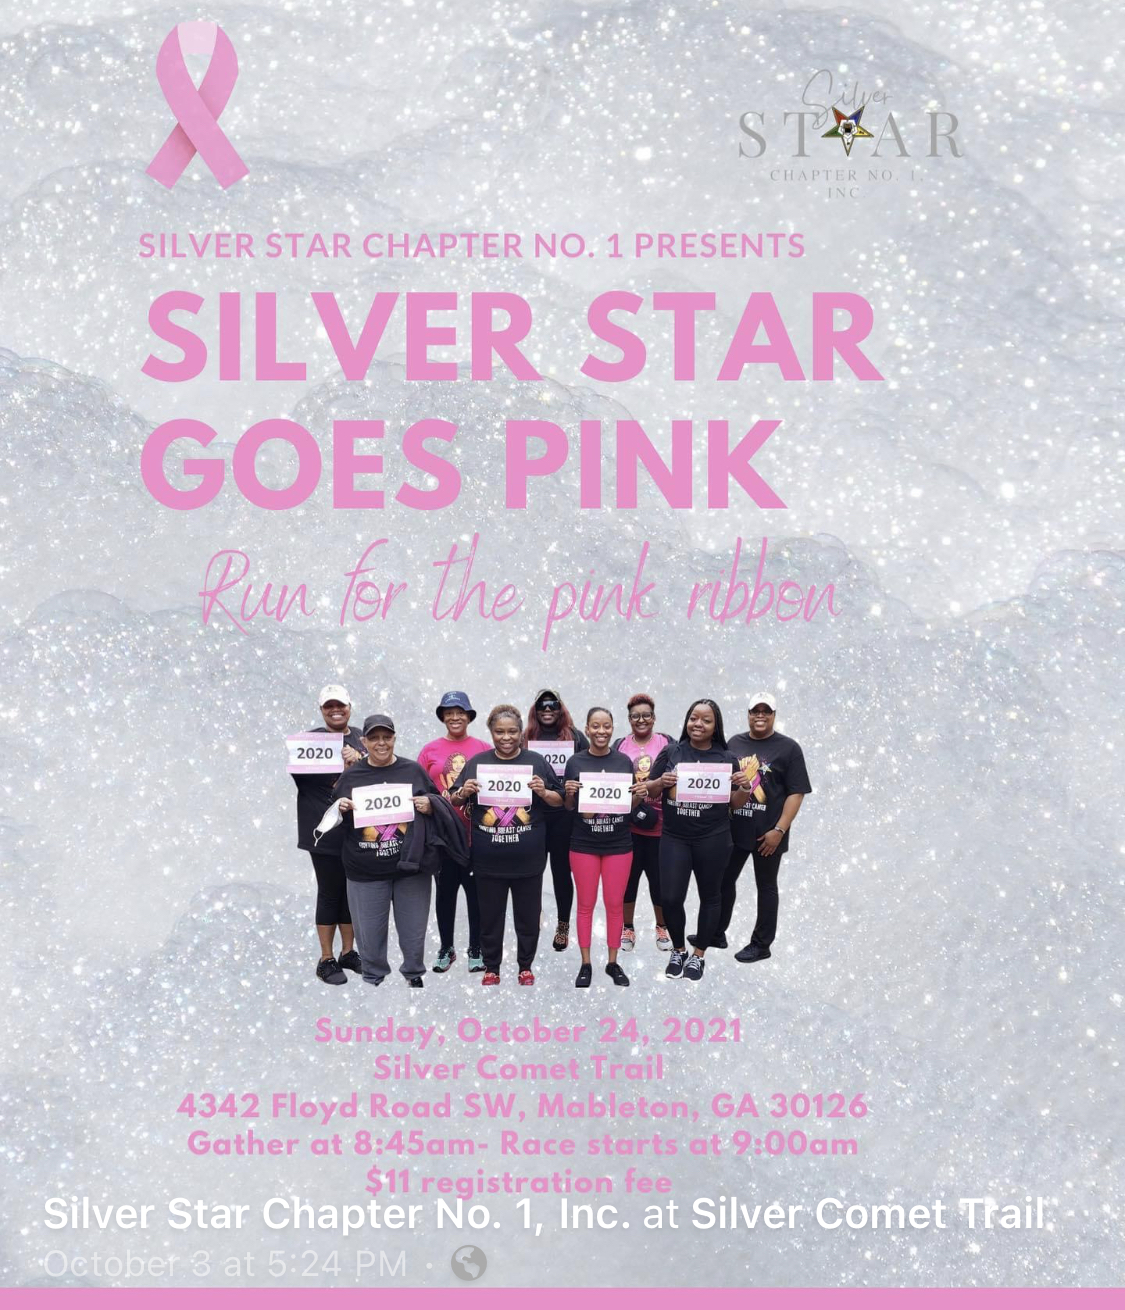 Silver Star Breast Cancer Walk 5K logo on RaceRaves